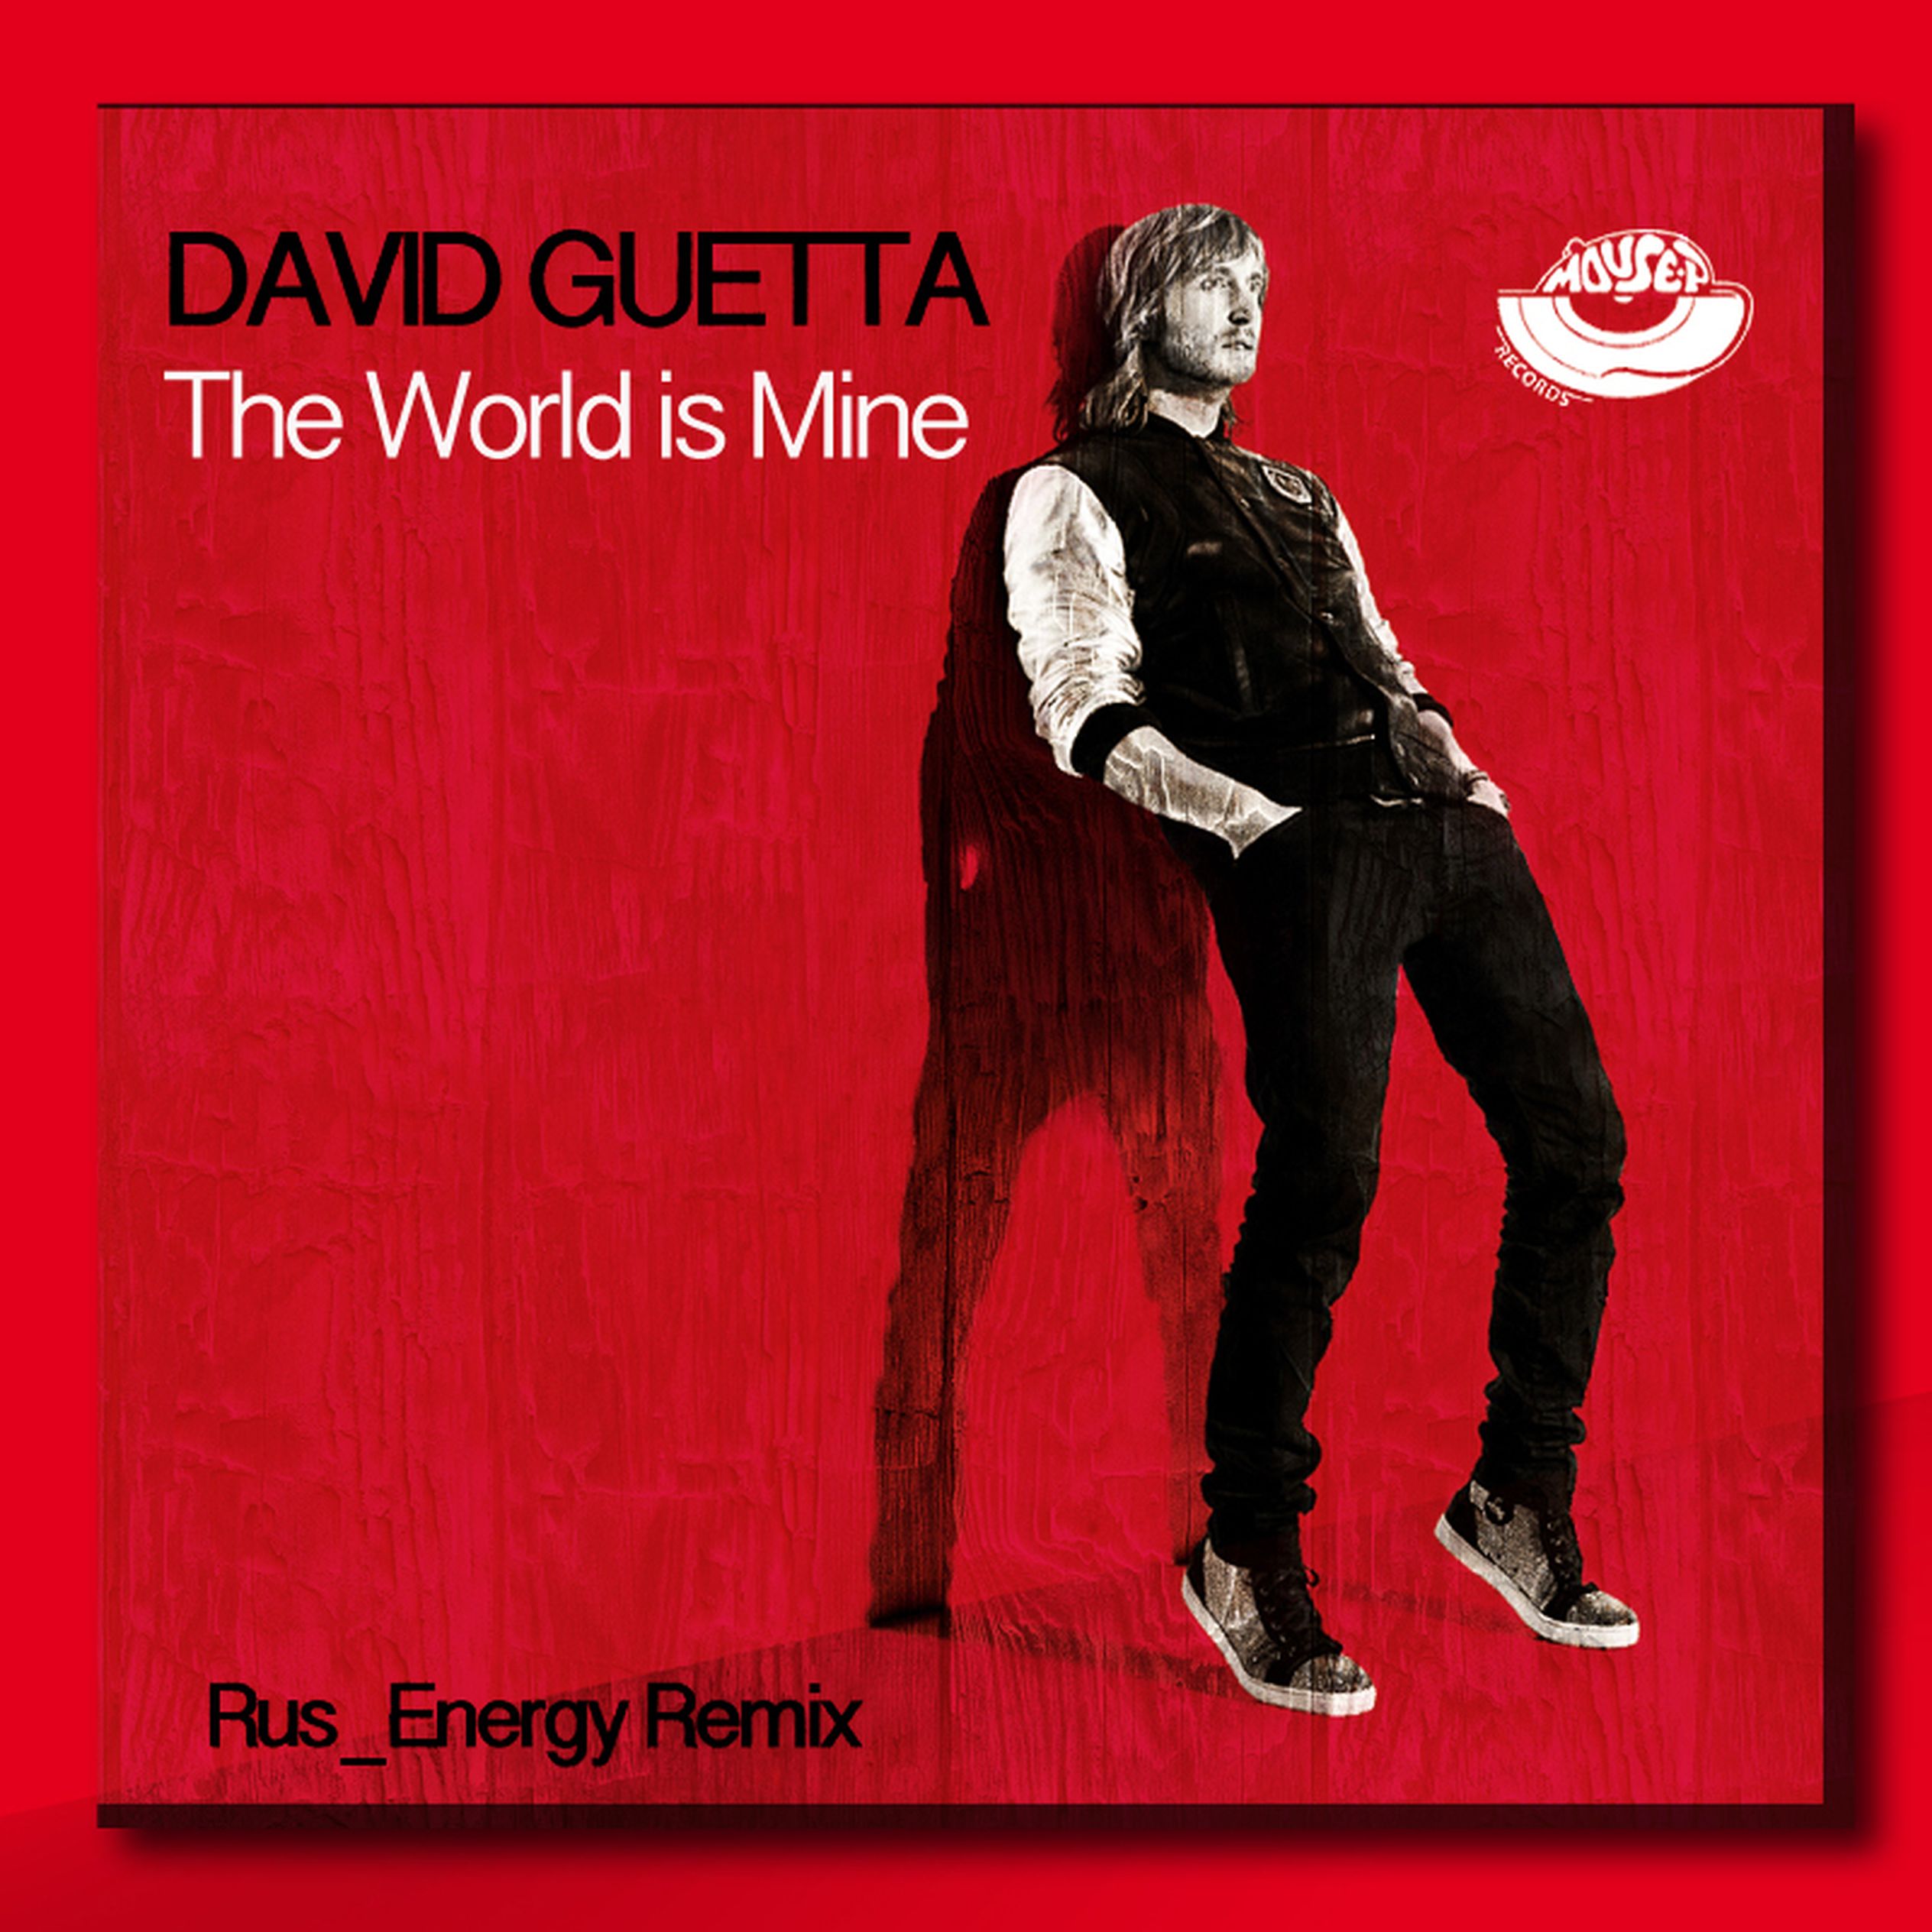 Песня the world is mine. Дэвид Гетта ворлд из майн. David Guetta the World is mine. David Guetta the World is mine обложка. The World is mine (2004) David Guetta.